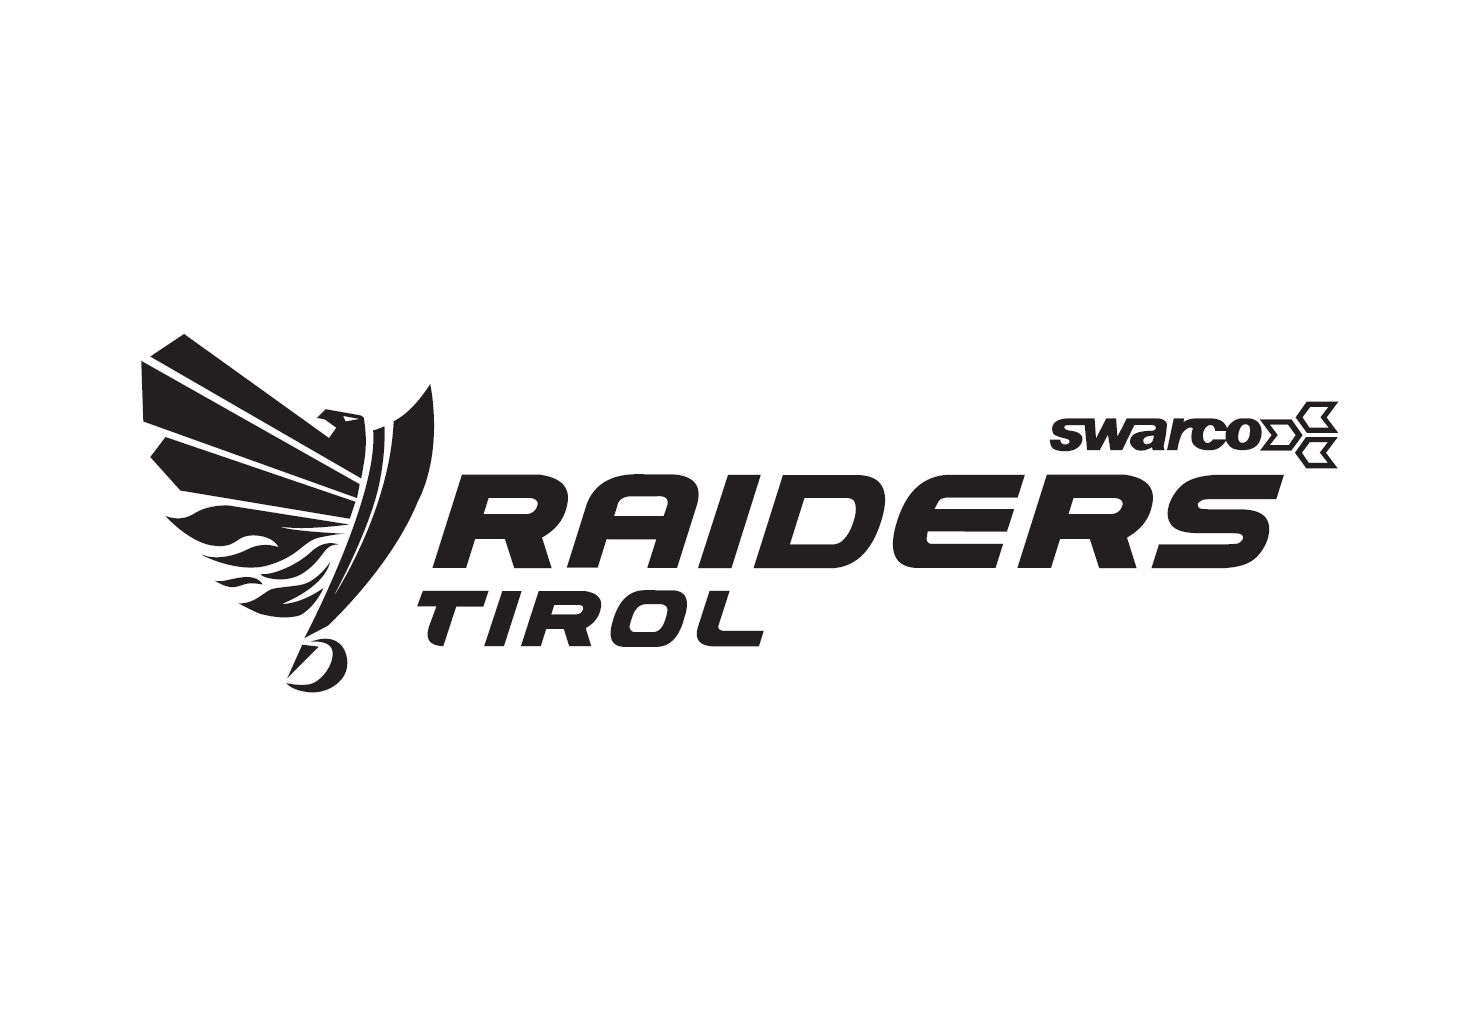 Logo Raiders